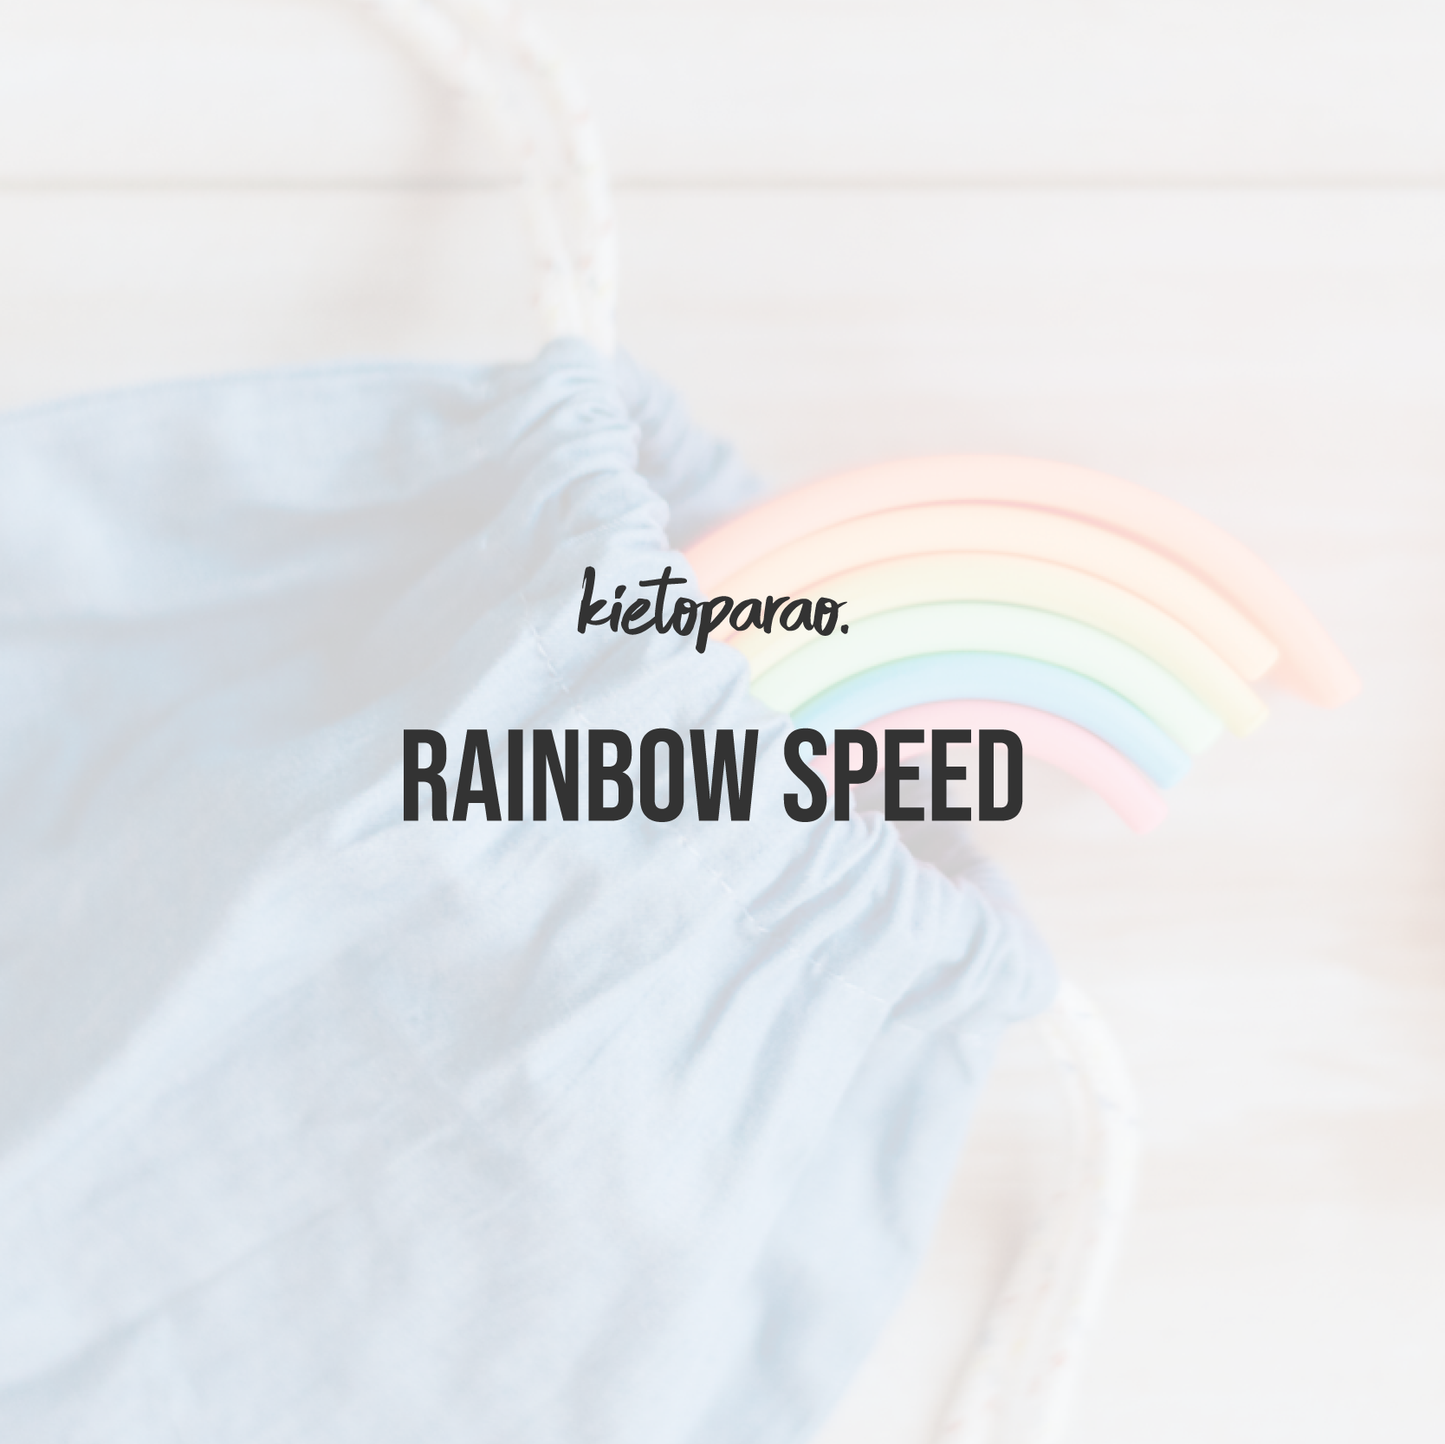 Card game Rainbow Speed